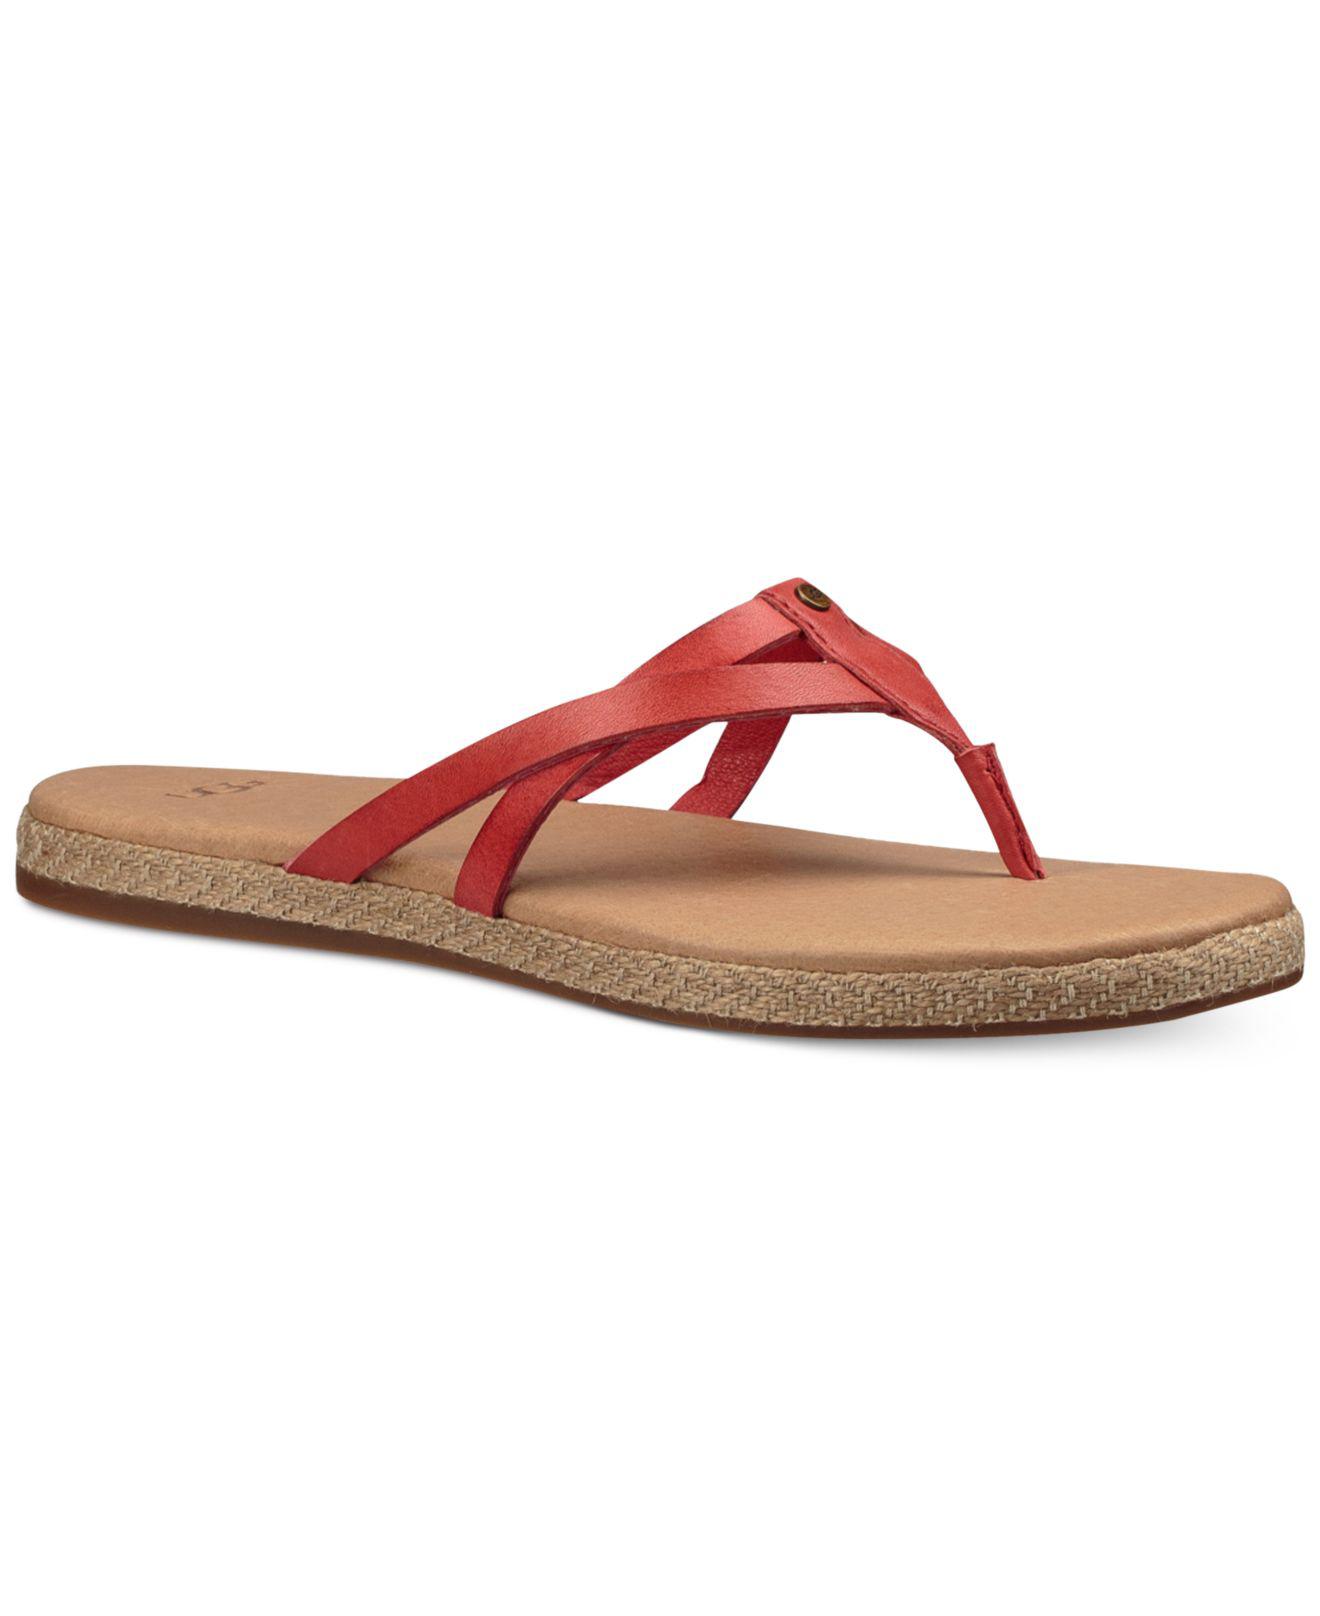 UGG Leather Annice Flip-flop Sandals - Lyst